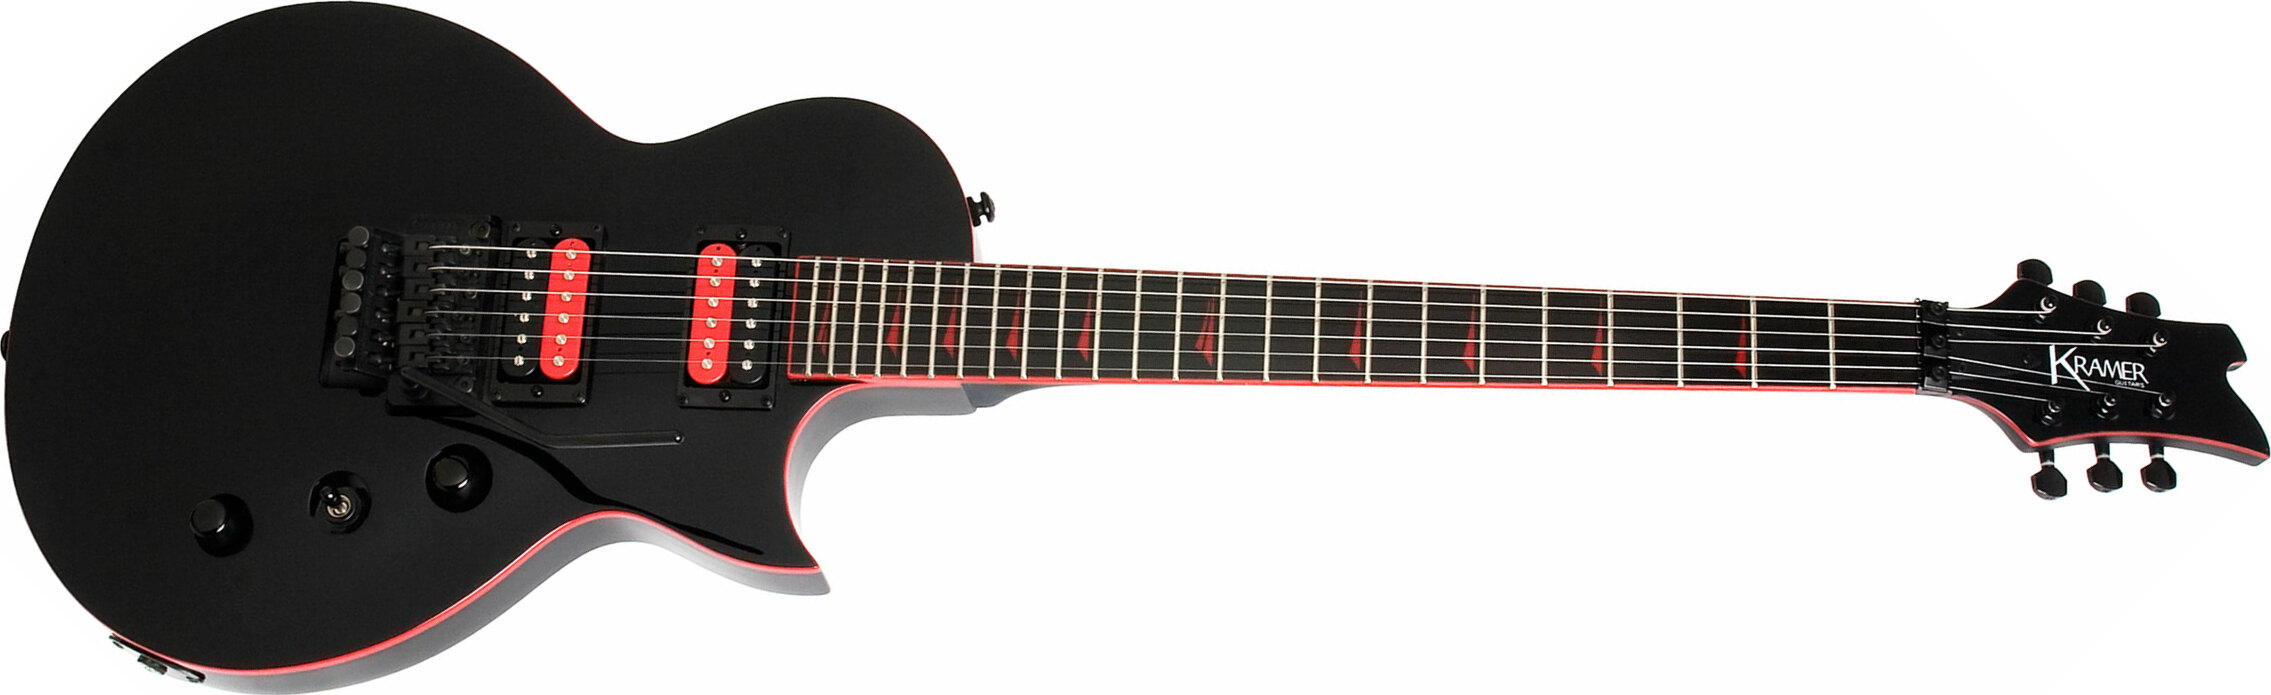 Kramer Assault 220 2h Fr Rw - Black Red Binding - Enkel gesneden elektrische gitaar - Main picture